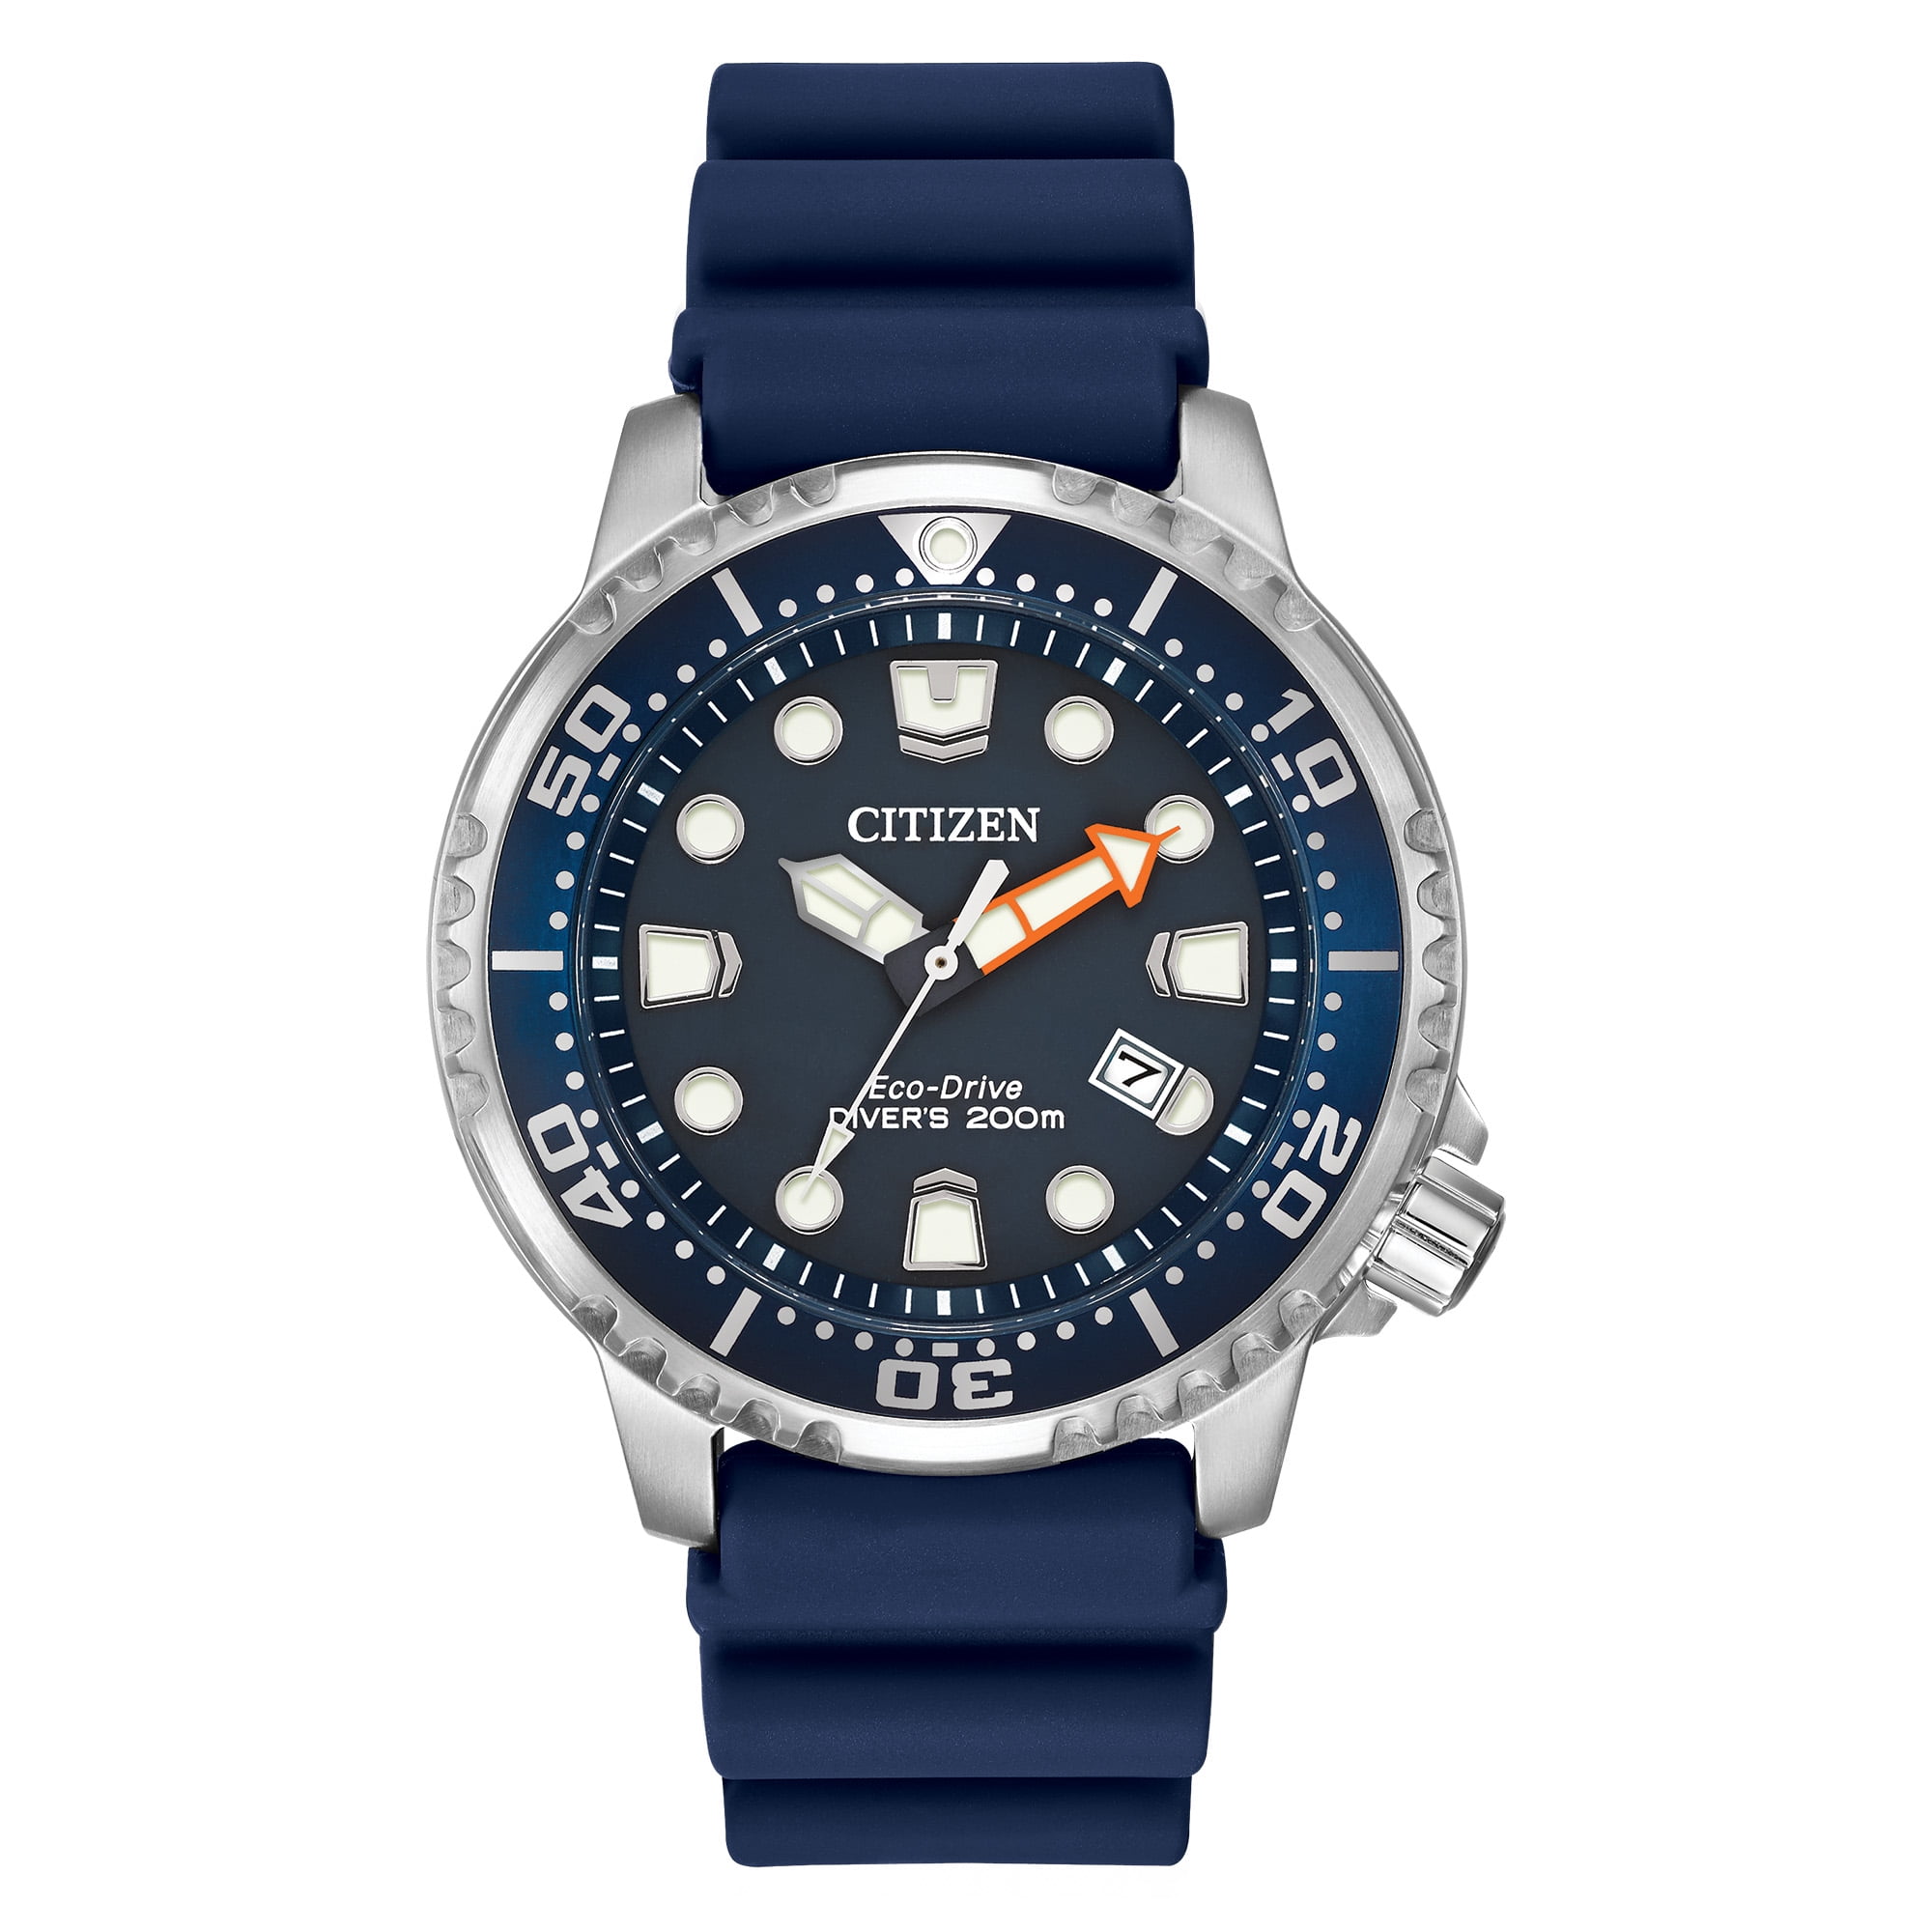 Citizen Men's Eco-Drive Promaster Diver Watch BN0151-09L 